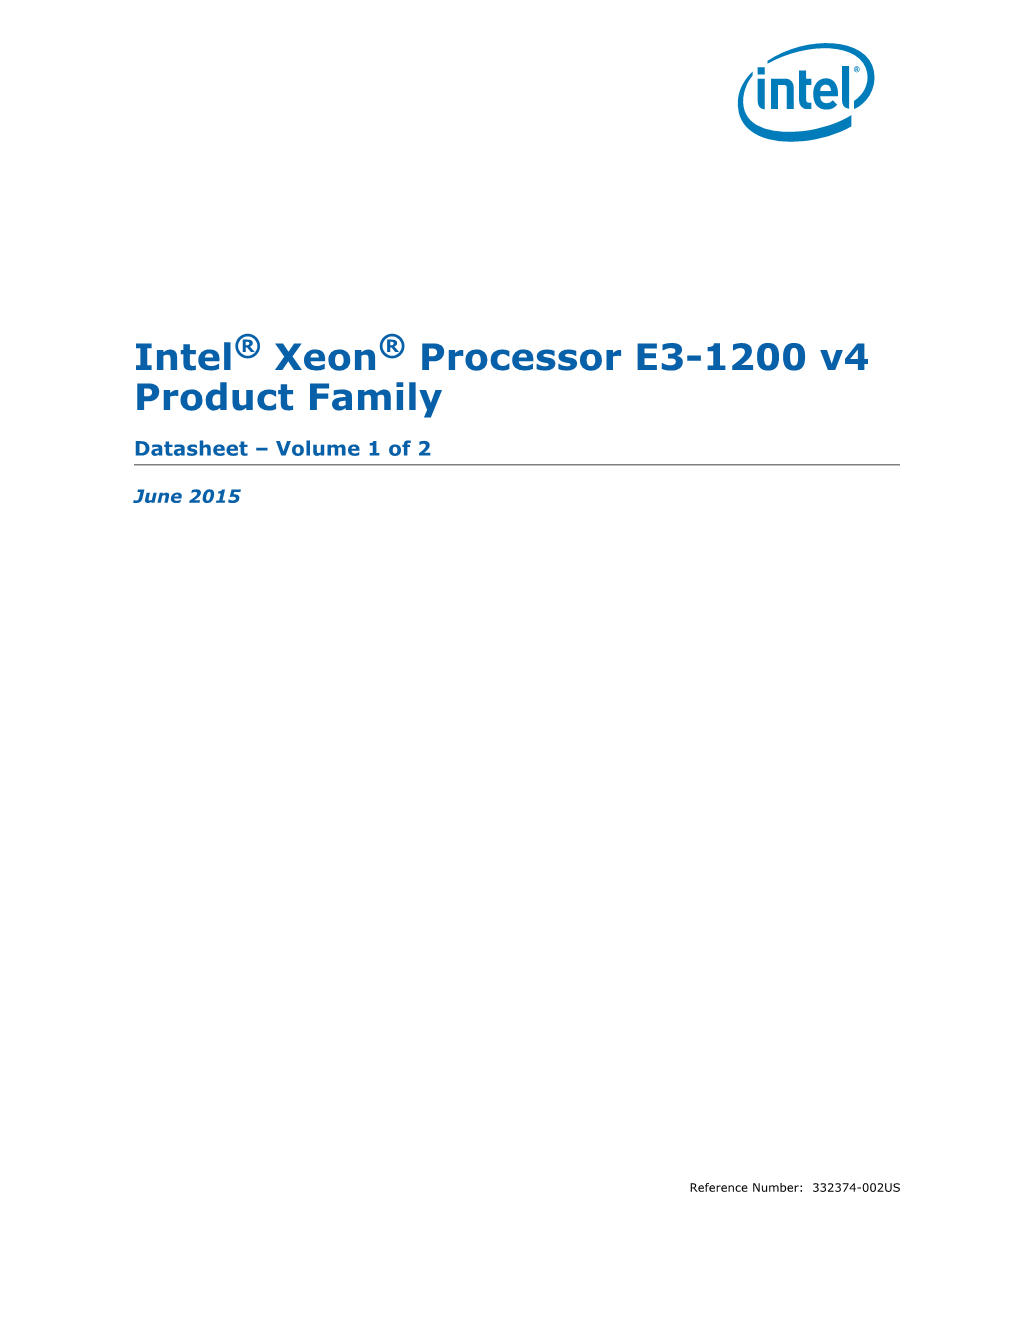 Intel® Xeon® Processor E3-1200 V4 Product Family